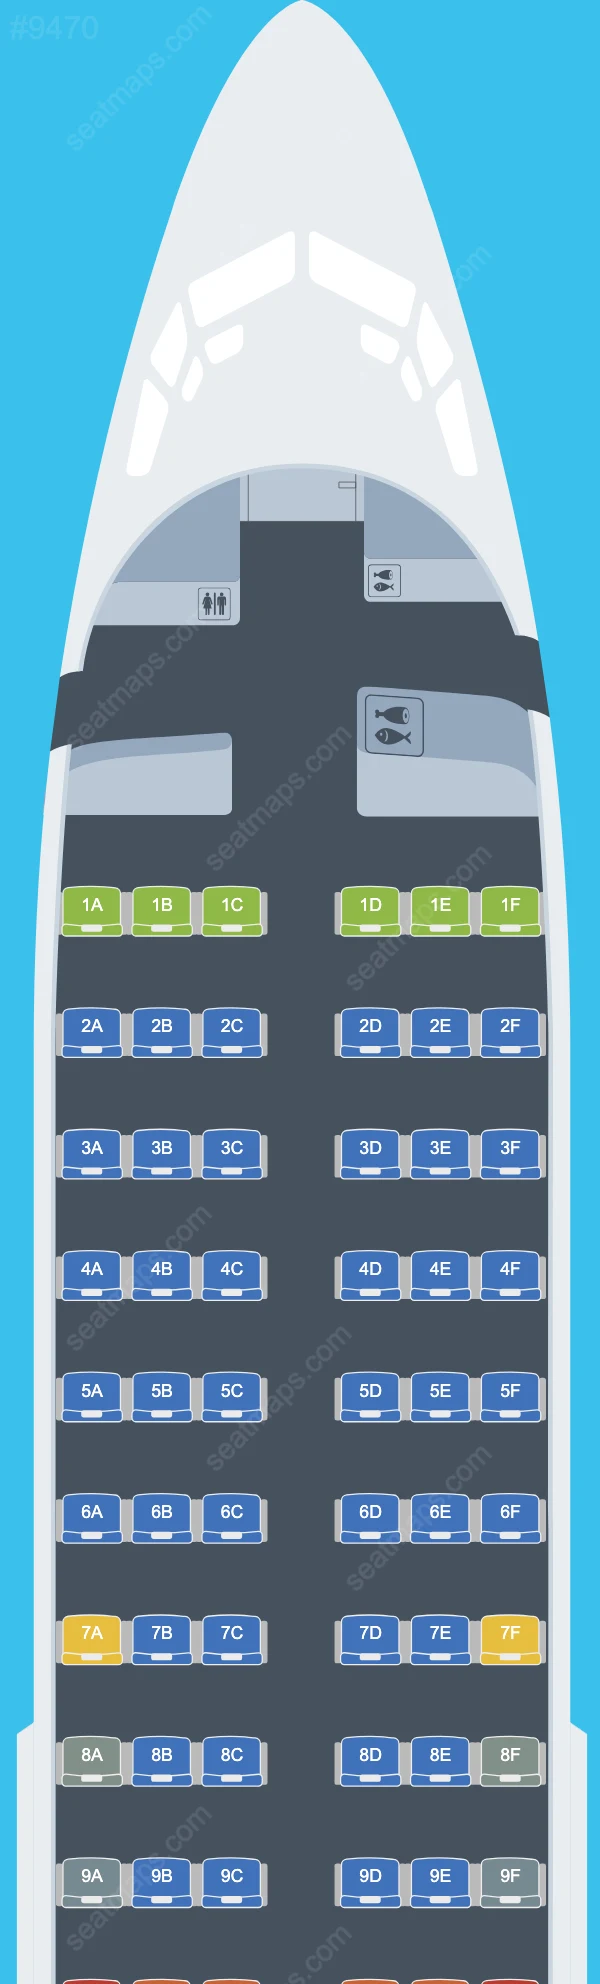 Схема салона Bahamasair в самолете Boeing 737 737-700